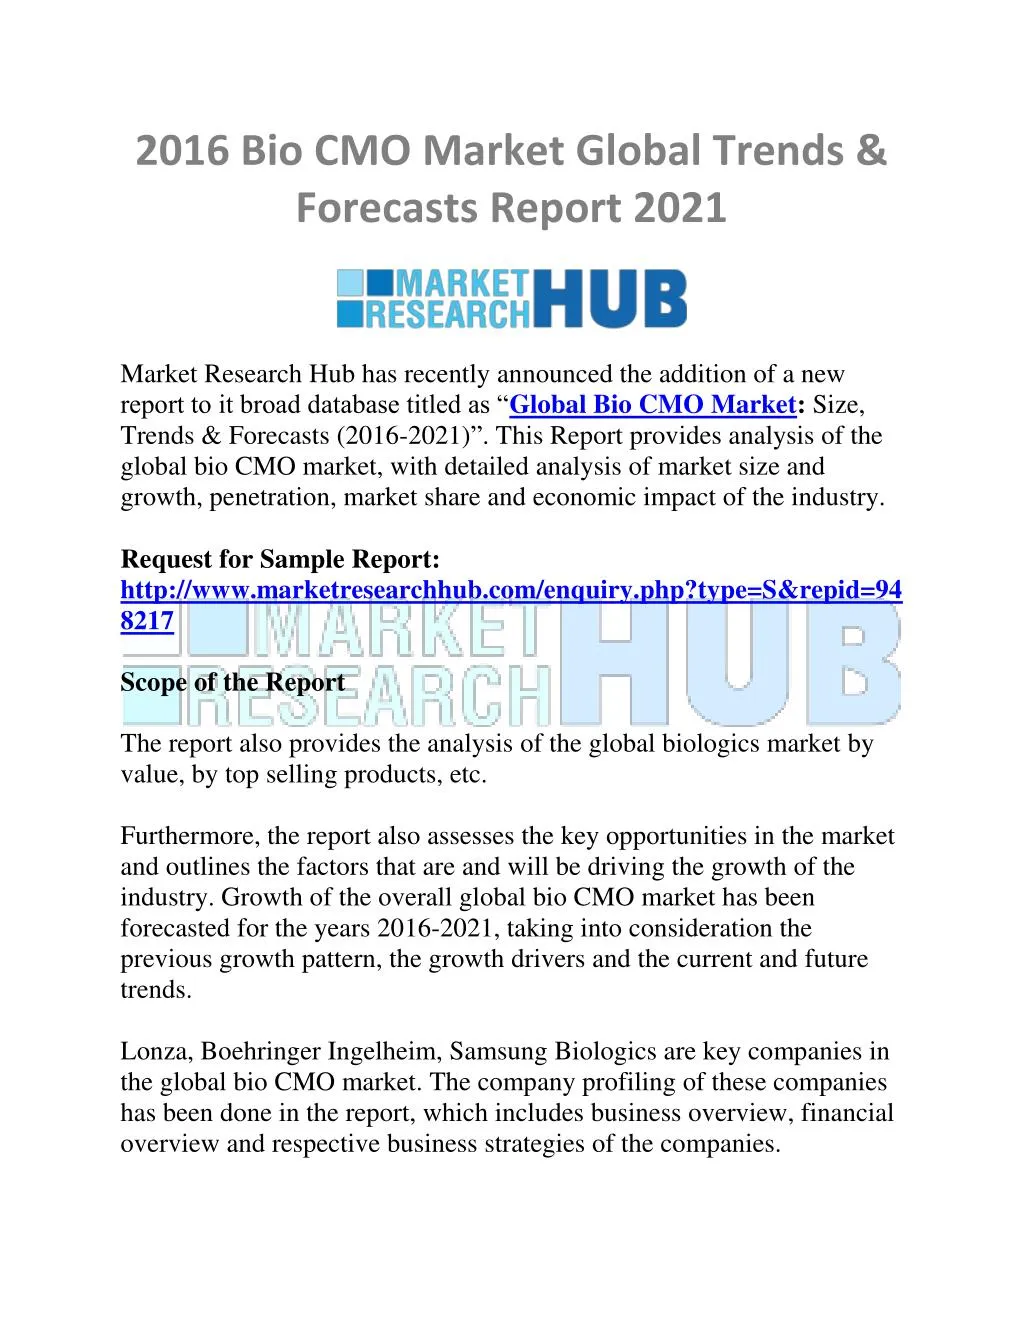 2016 bio cmo market global trends forecasts